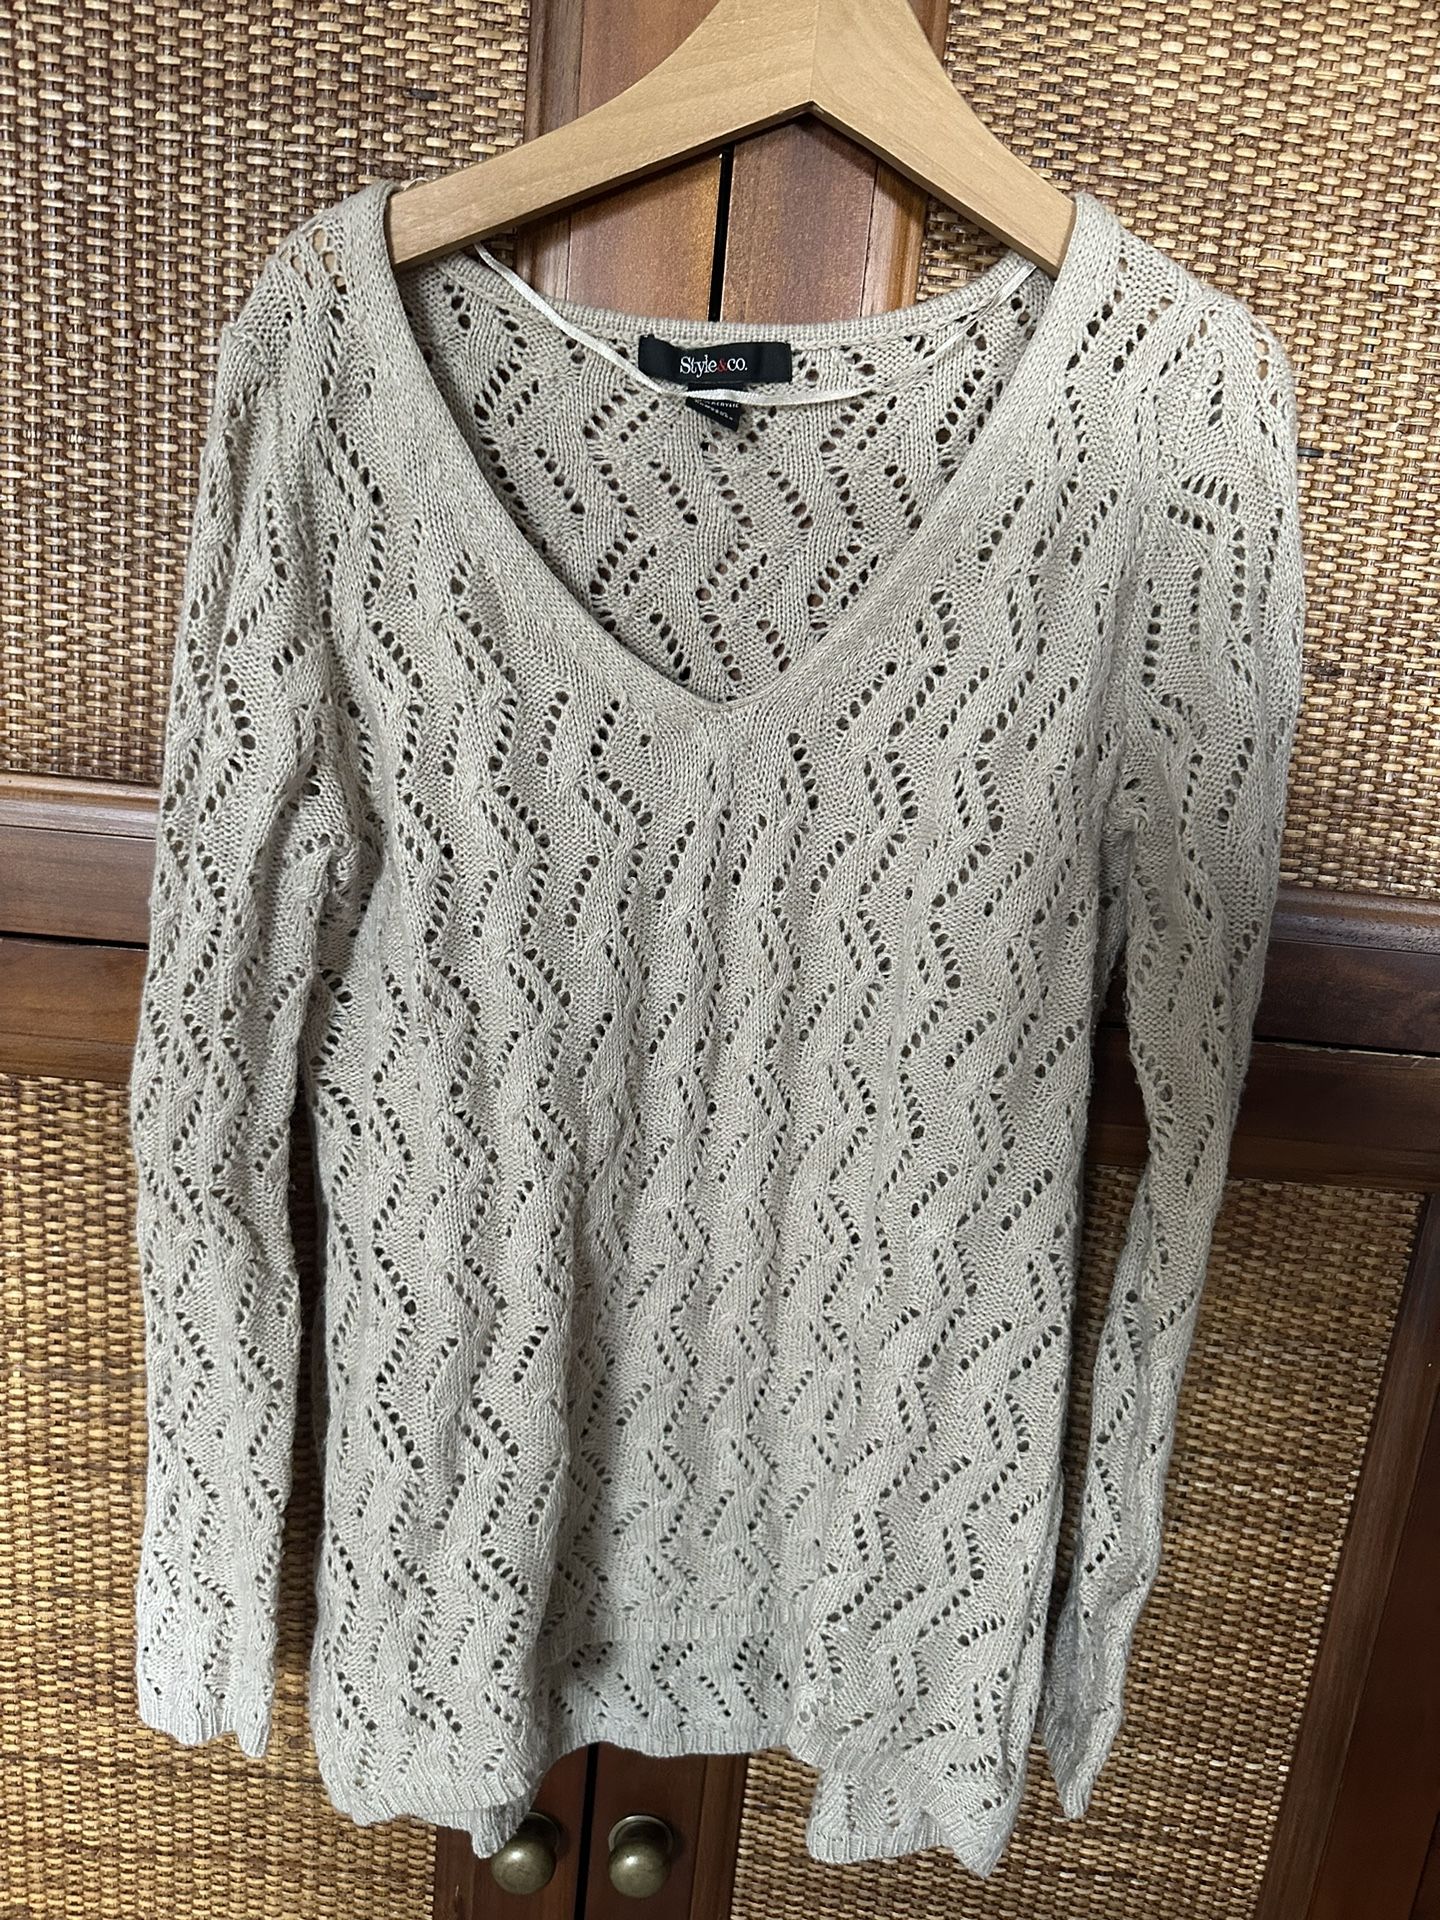 Style & Co XS beige tan crochet-look V-neck SWEATER, CARDIGAN, TOP.  NWOT